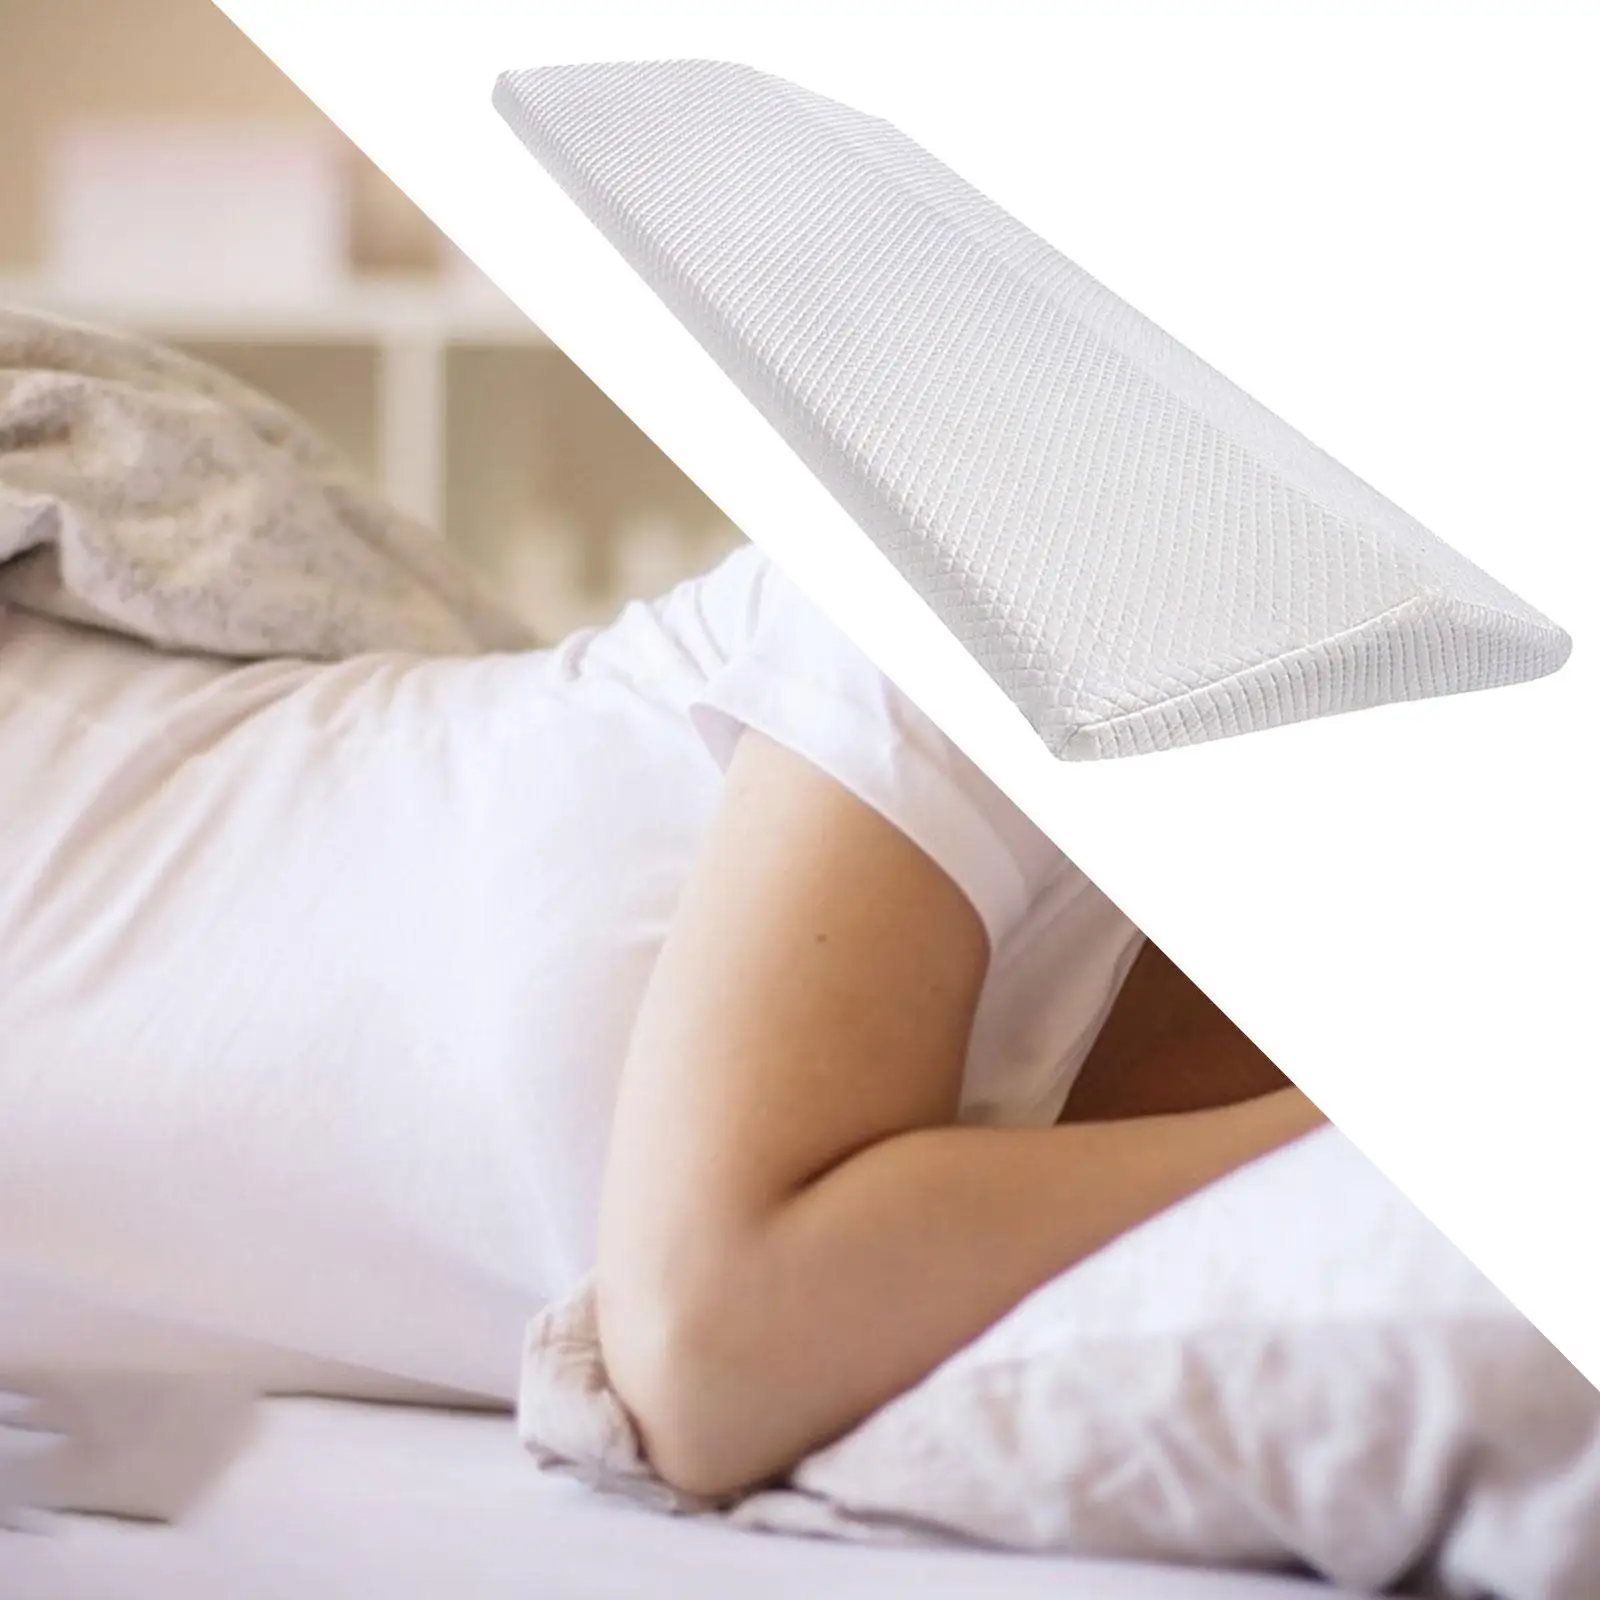 Waist Support Cushion Ergonomic Side Sleepers Wedge Bolster Waist Pillow for Hip Bed